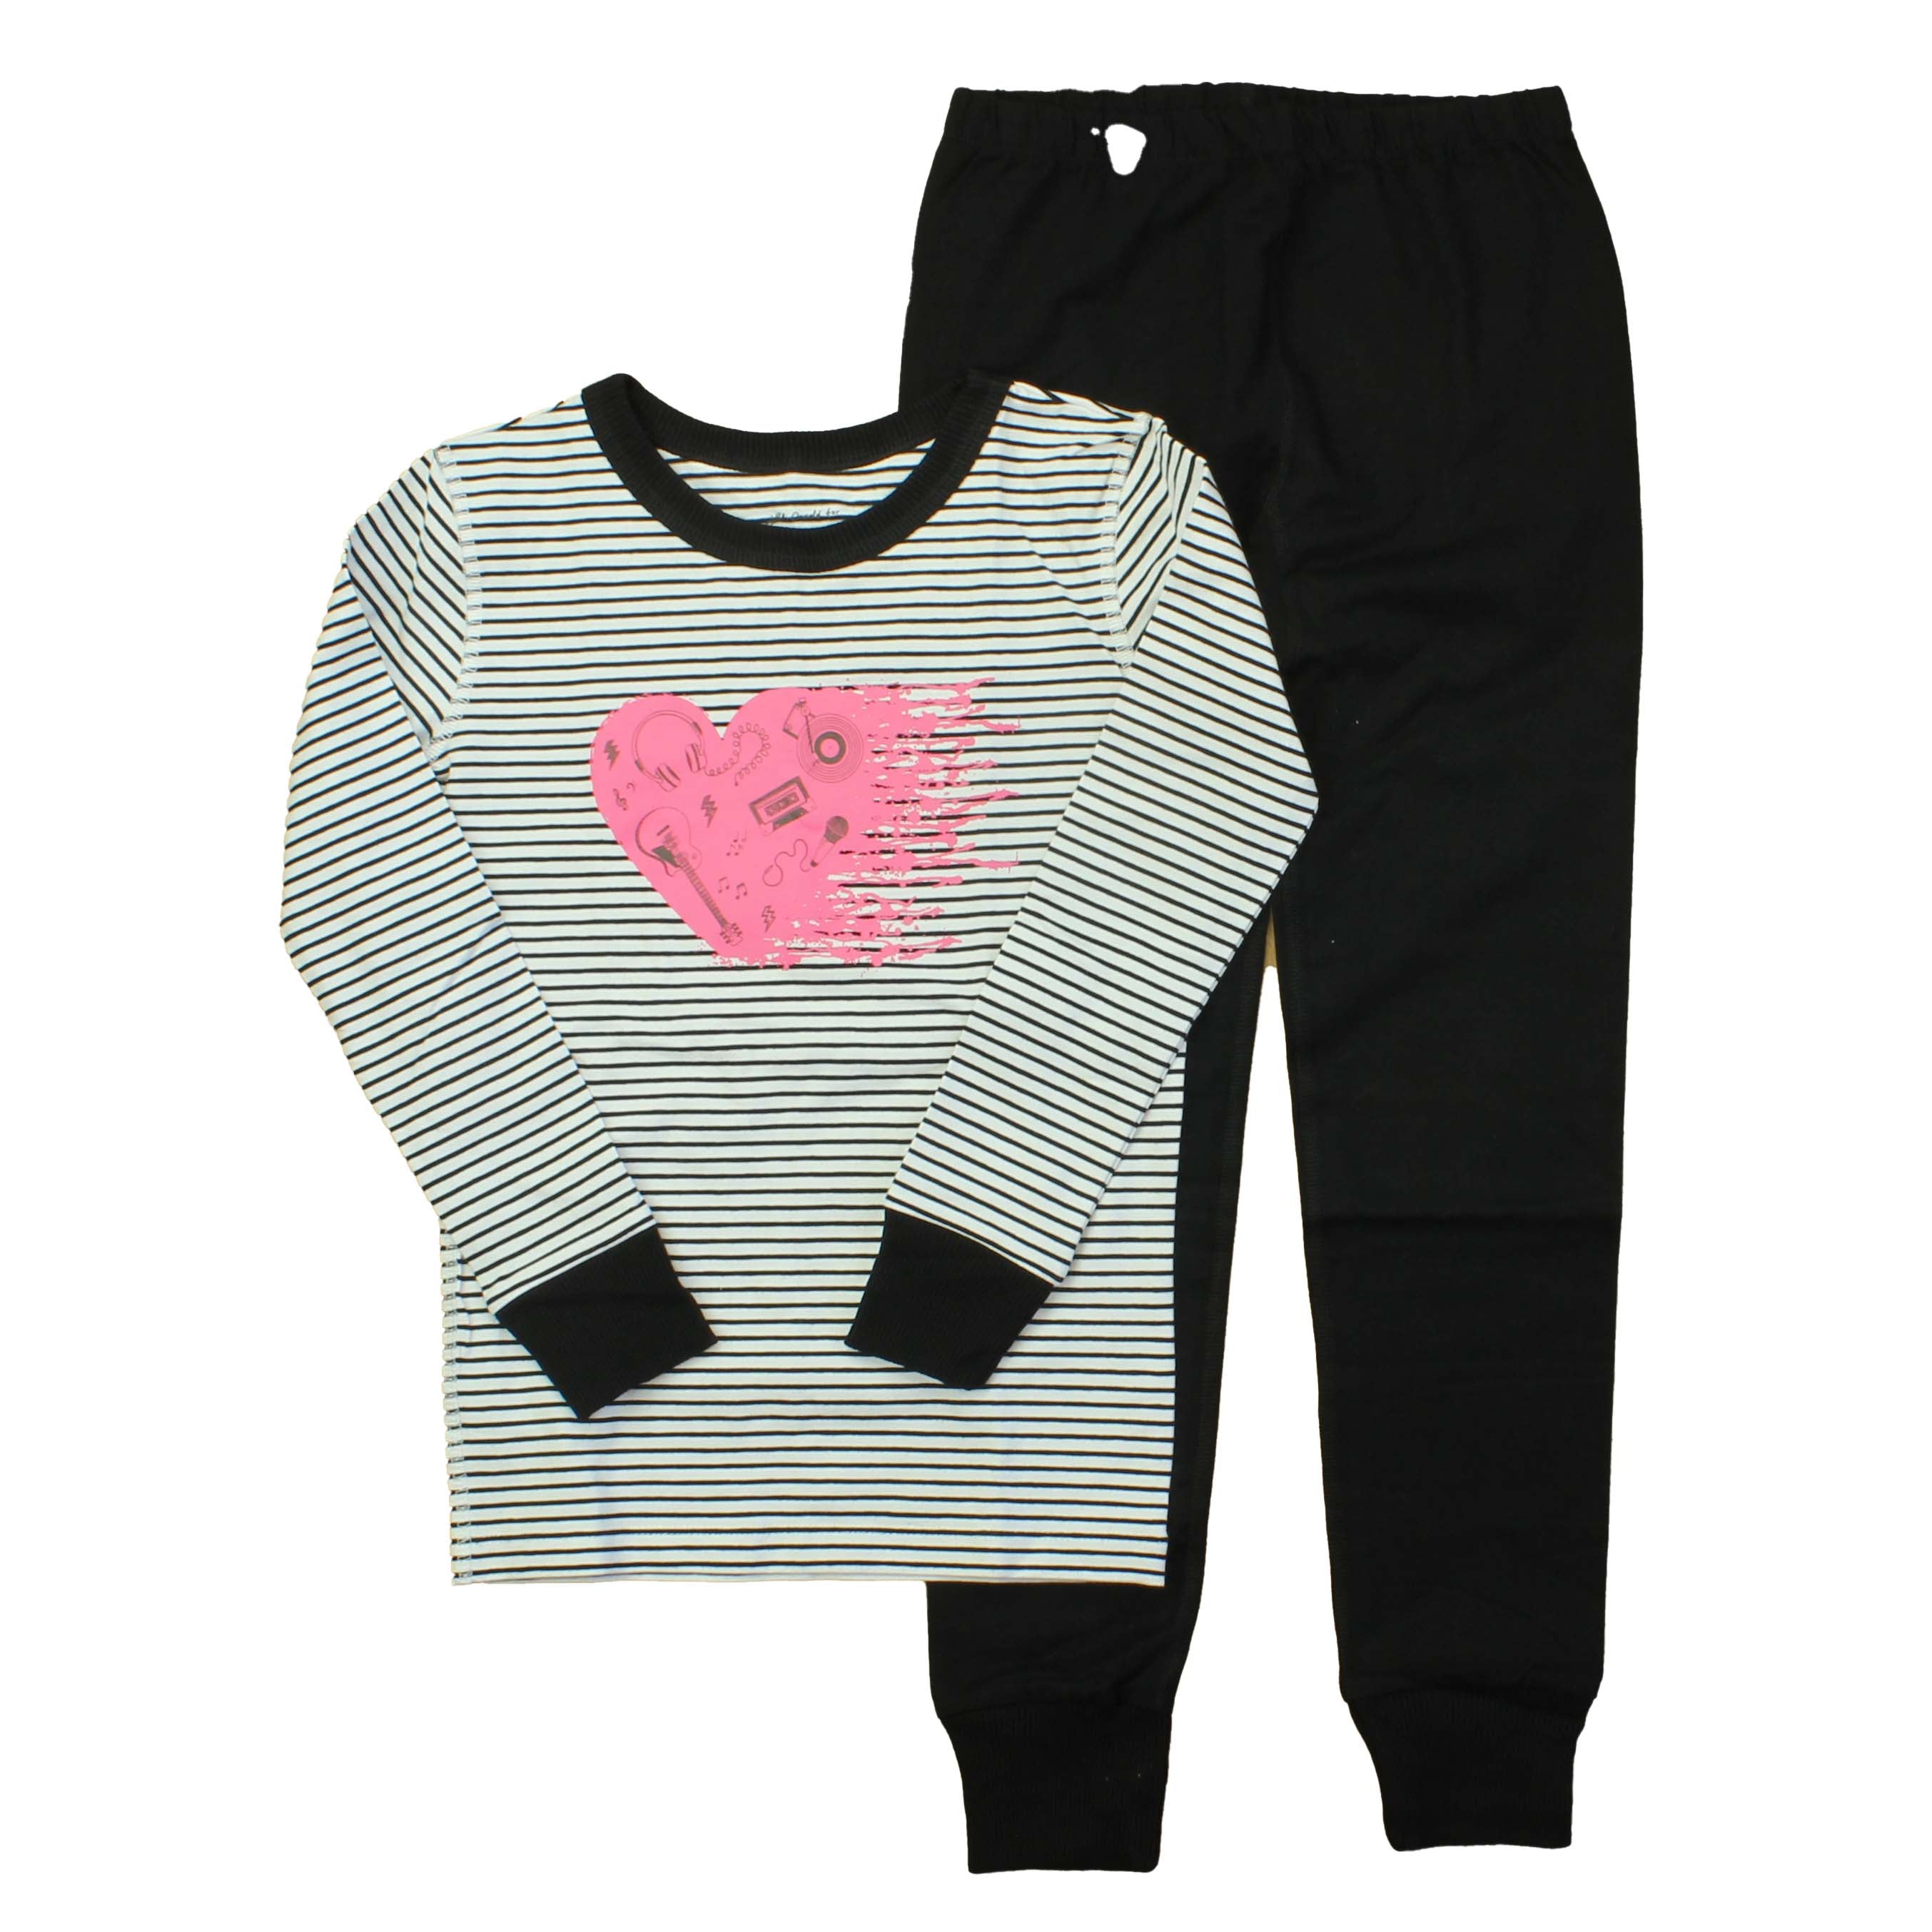 Pre-owned Black | White | Stripes | Pink Heart PJ Set size: Big Girl